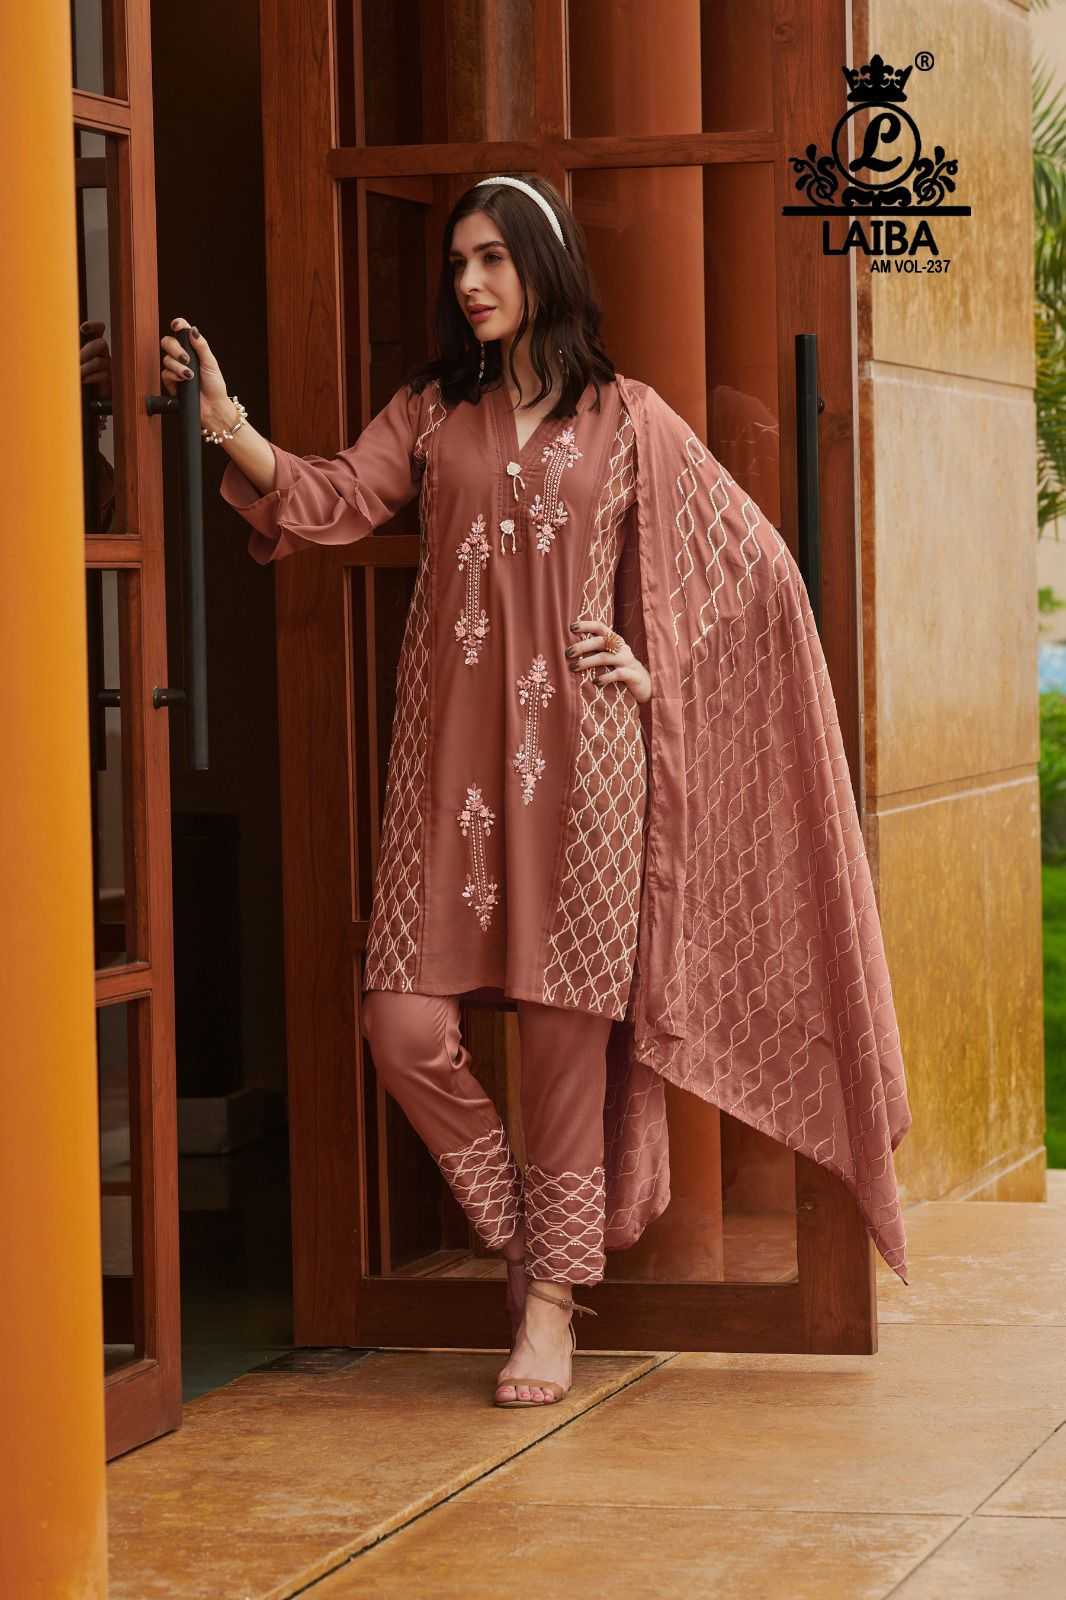 laiba am vol 237 pakistani fullstitch festive wear kurti pant dupatta set